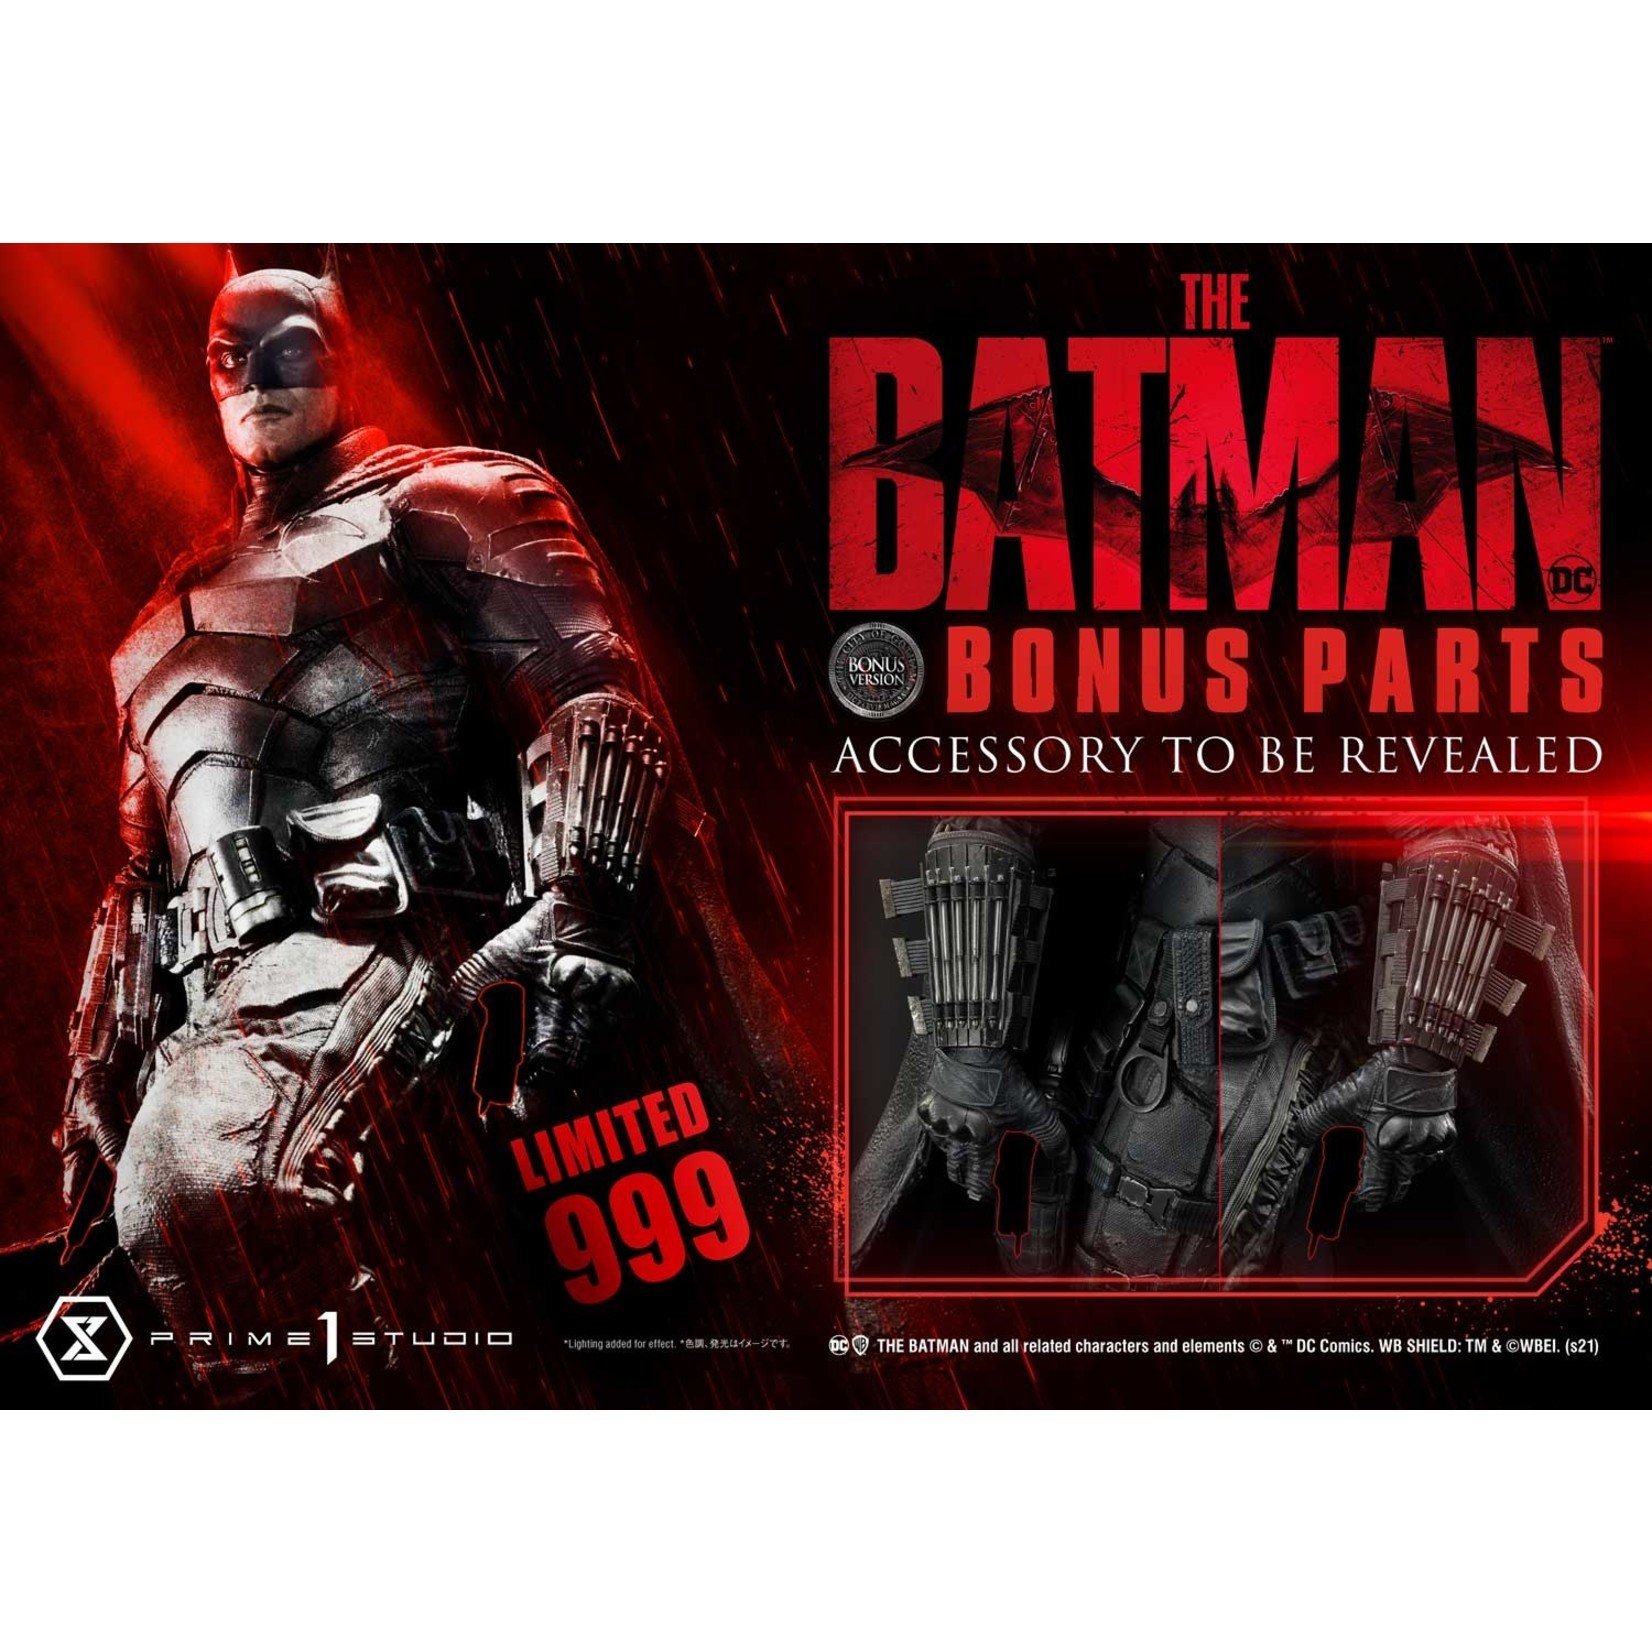 Prime 1 Studio [Preorder] Prime 1 Studio - THE BATMAN SPECIAL ART EDITION (THE BATMAN, 2022)